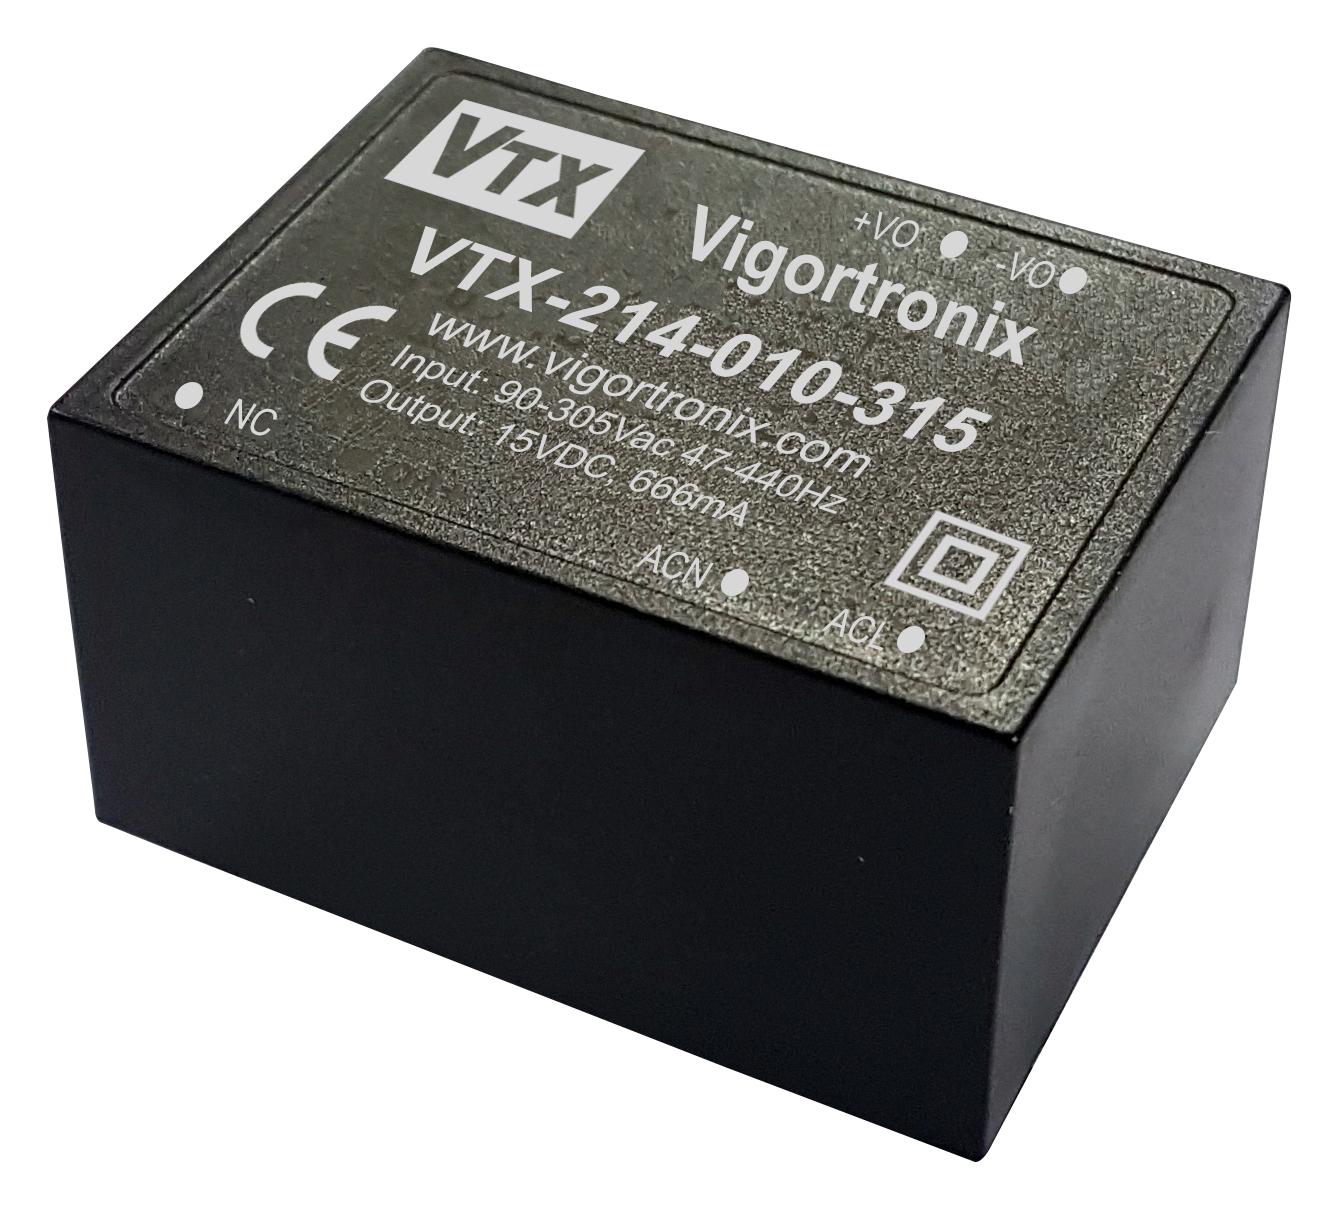 VTX-214-010-324